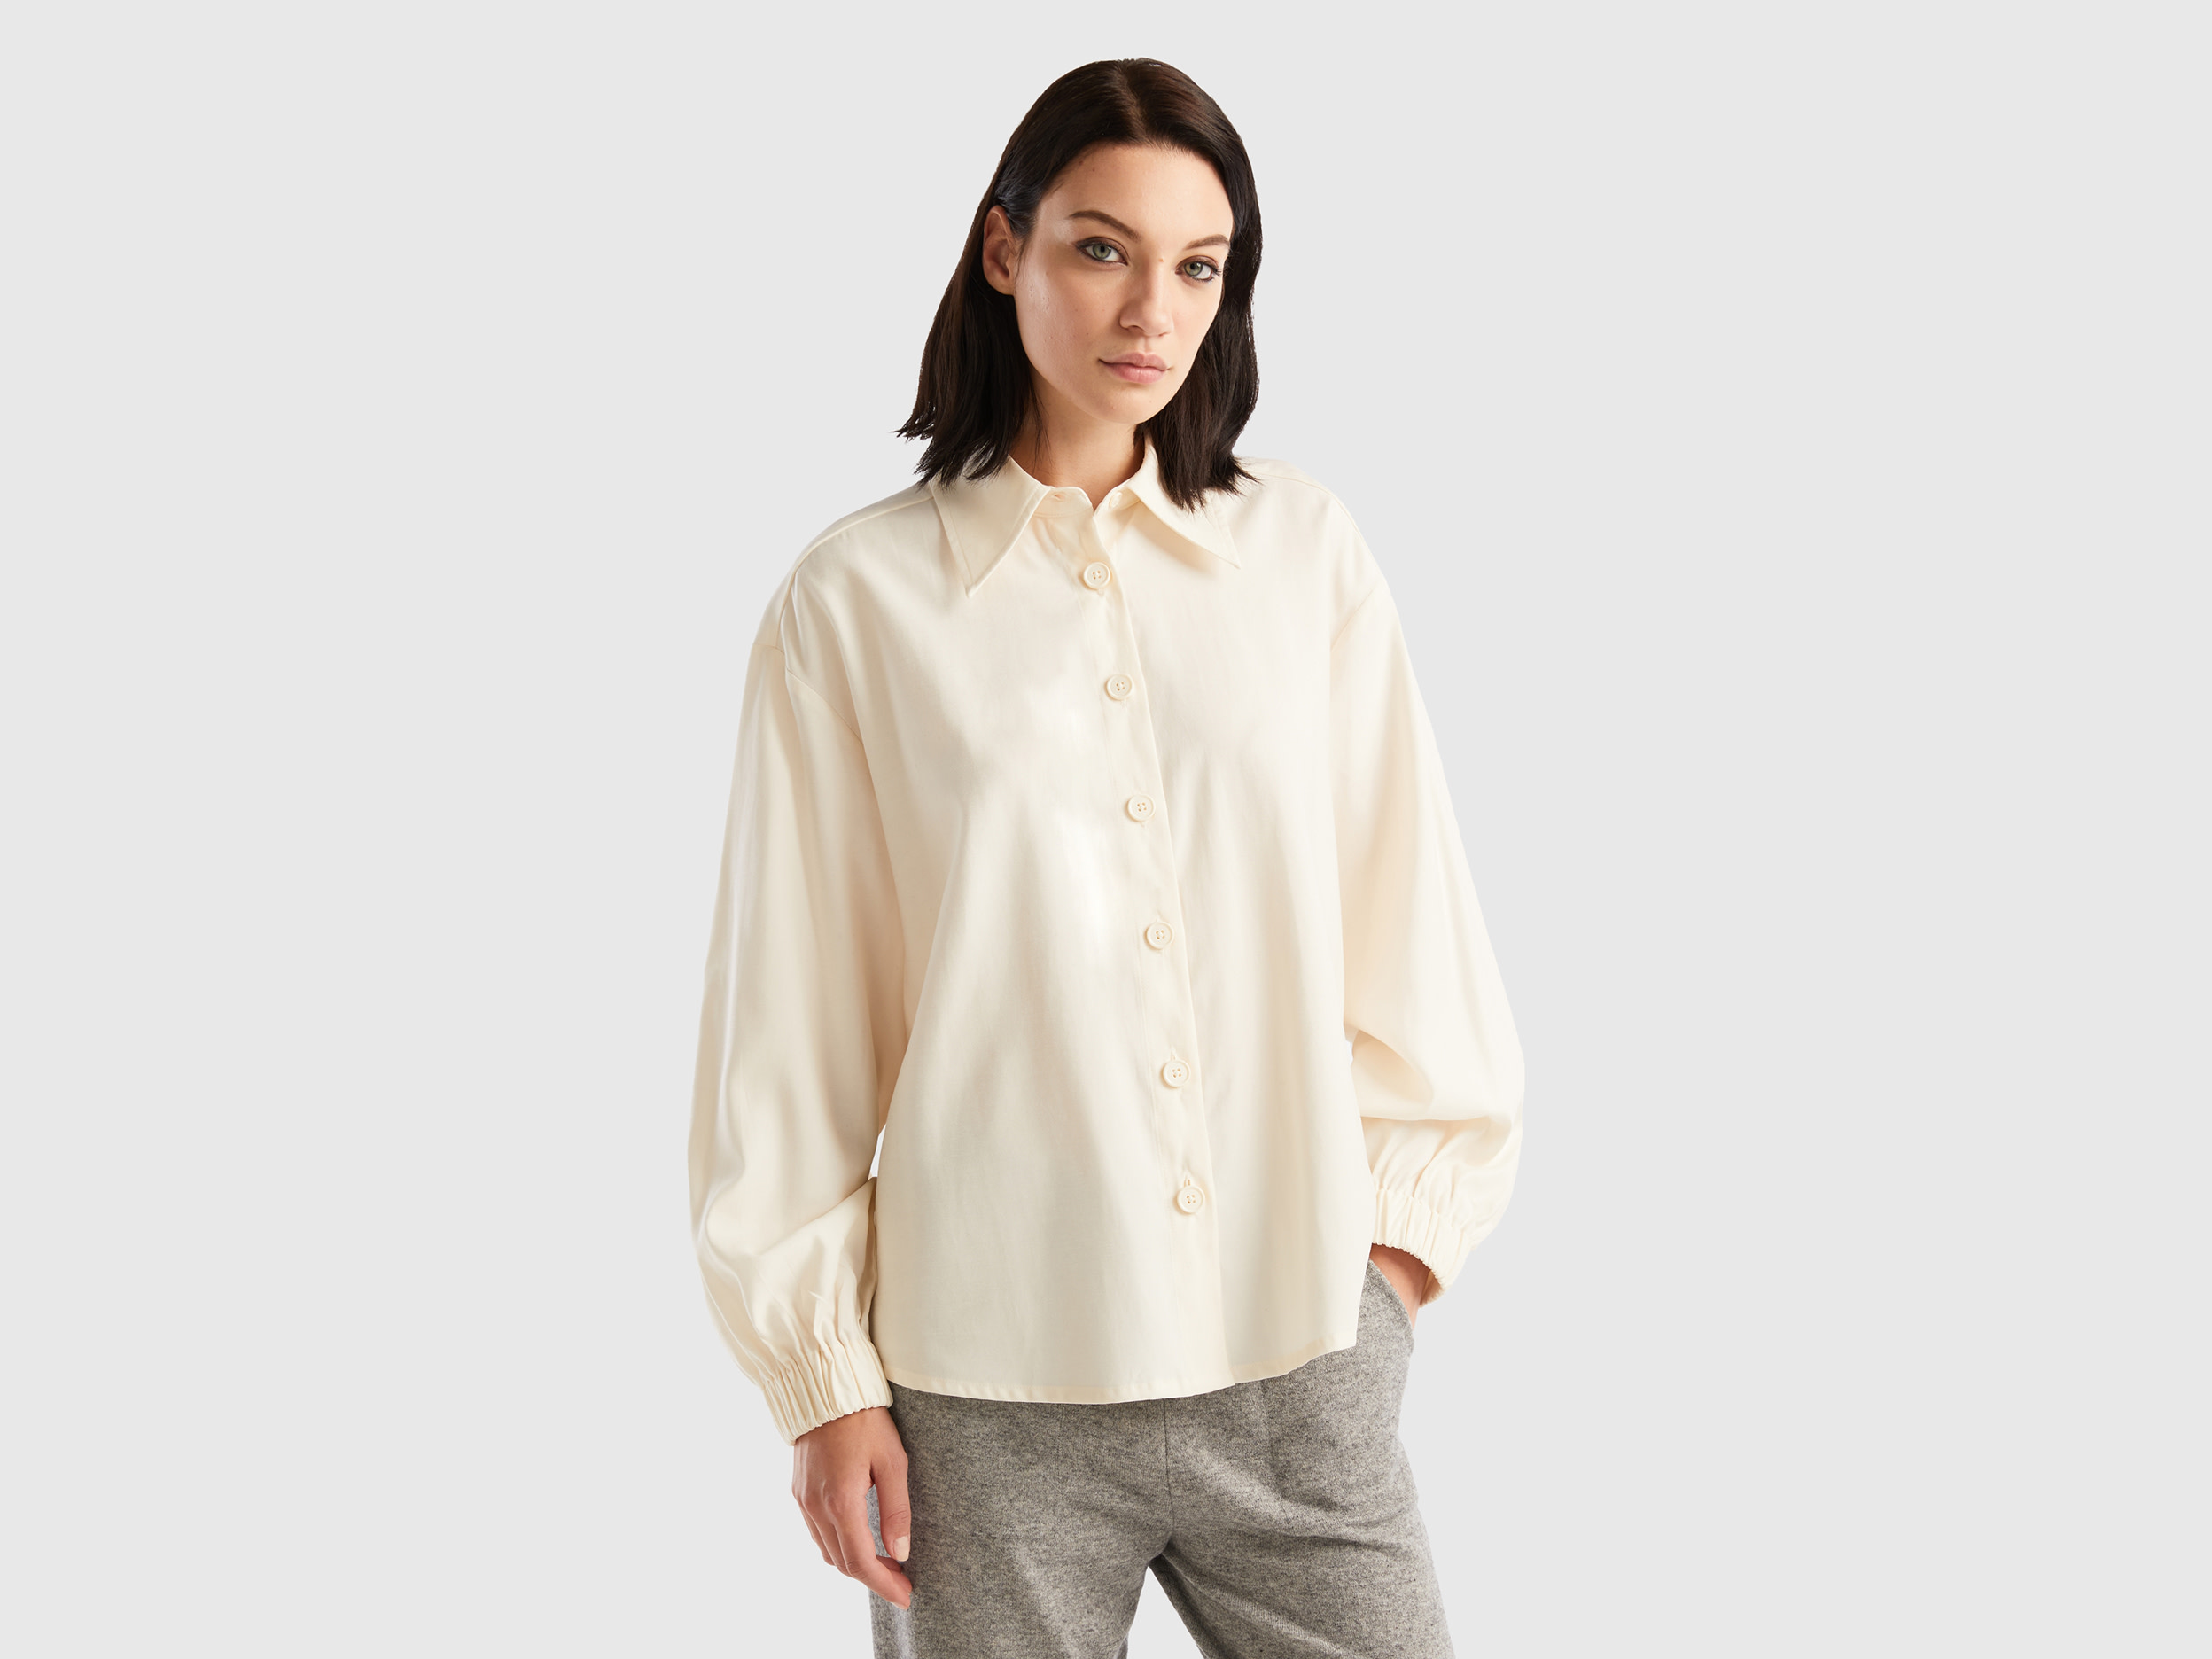 Benetton, Viscose And Linen Shirt, size M, Creamy White, Women